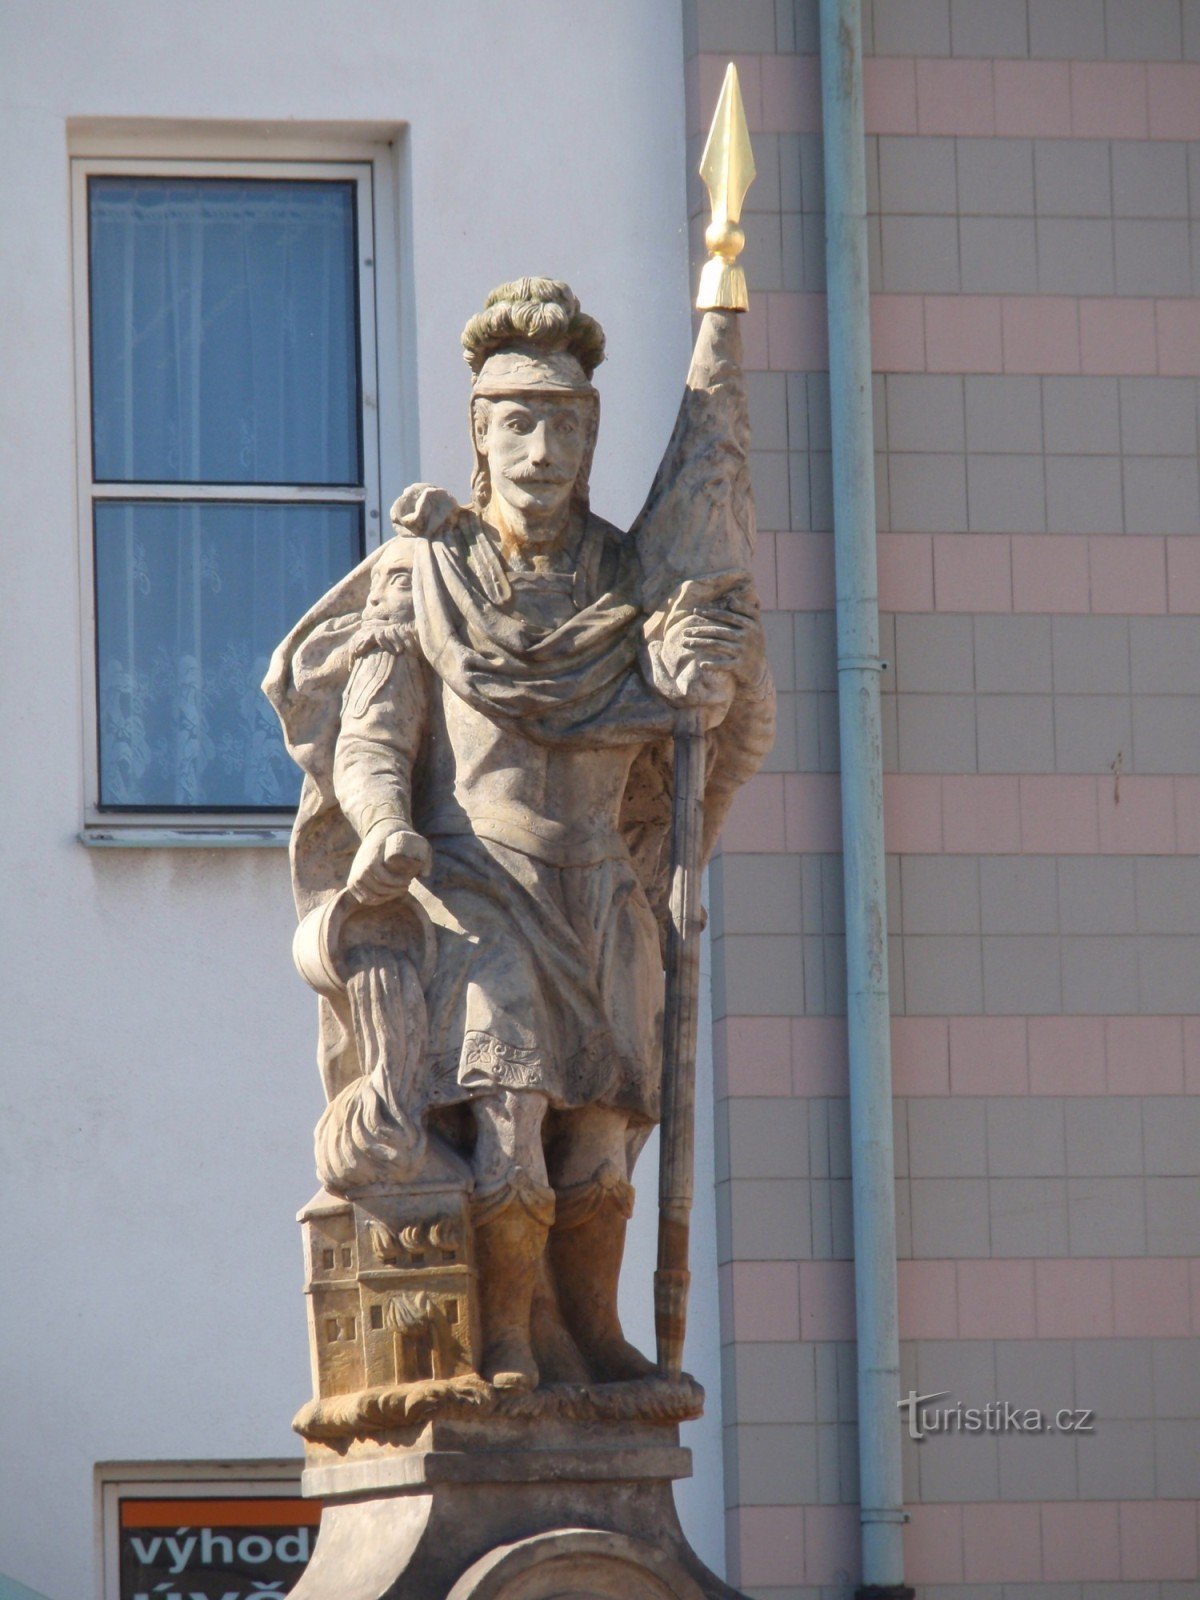 Ústí nad Orlicí - statue of St. Floriana